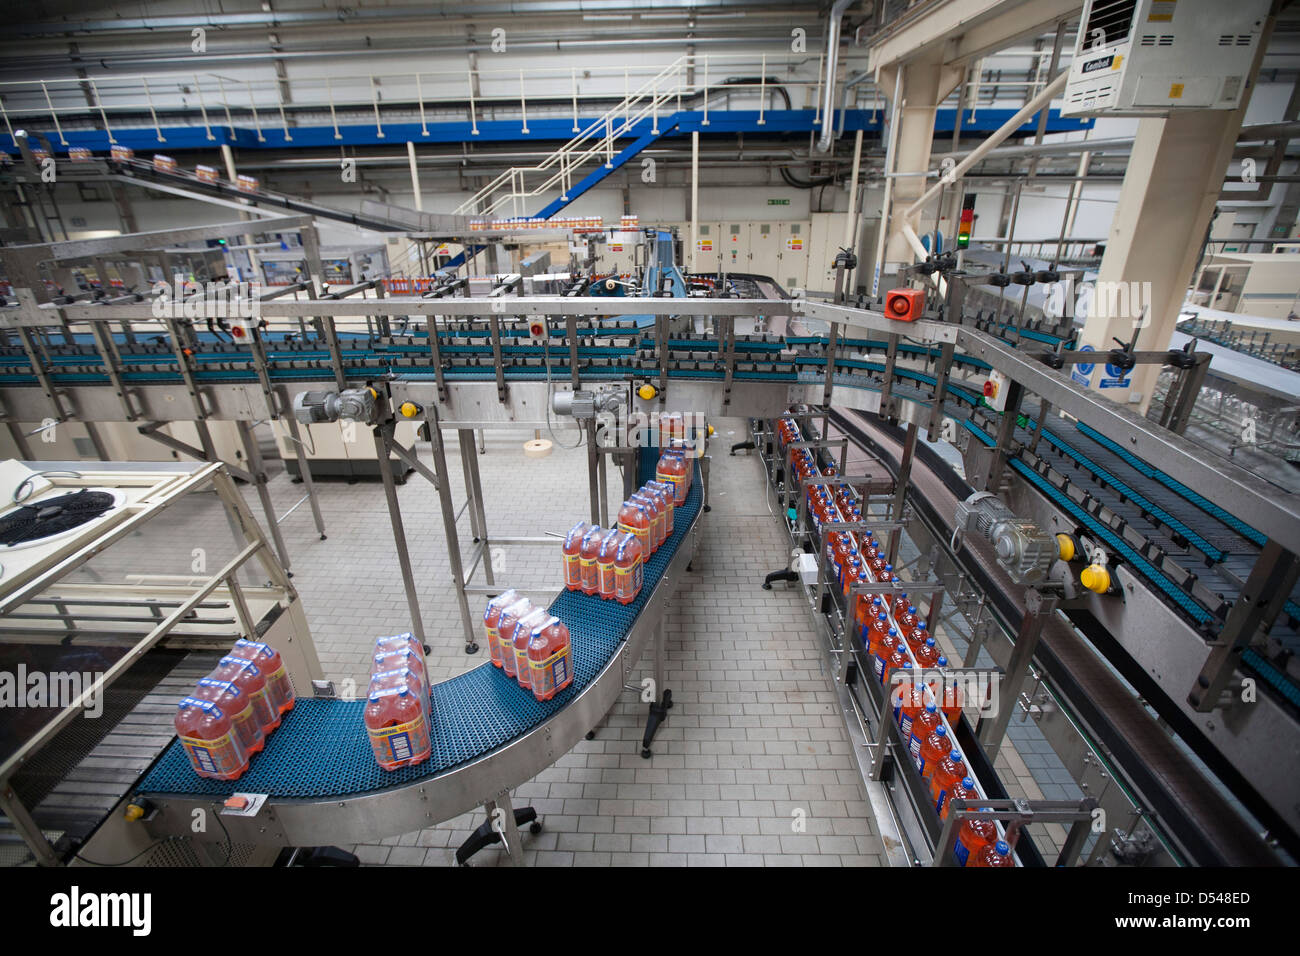 Schottlands Lieblingsgetränk Irn-Bru produziert in A G Barr, Glasgow. Stockfoto